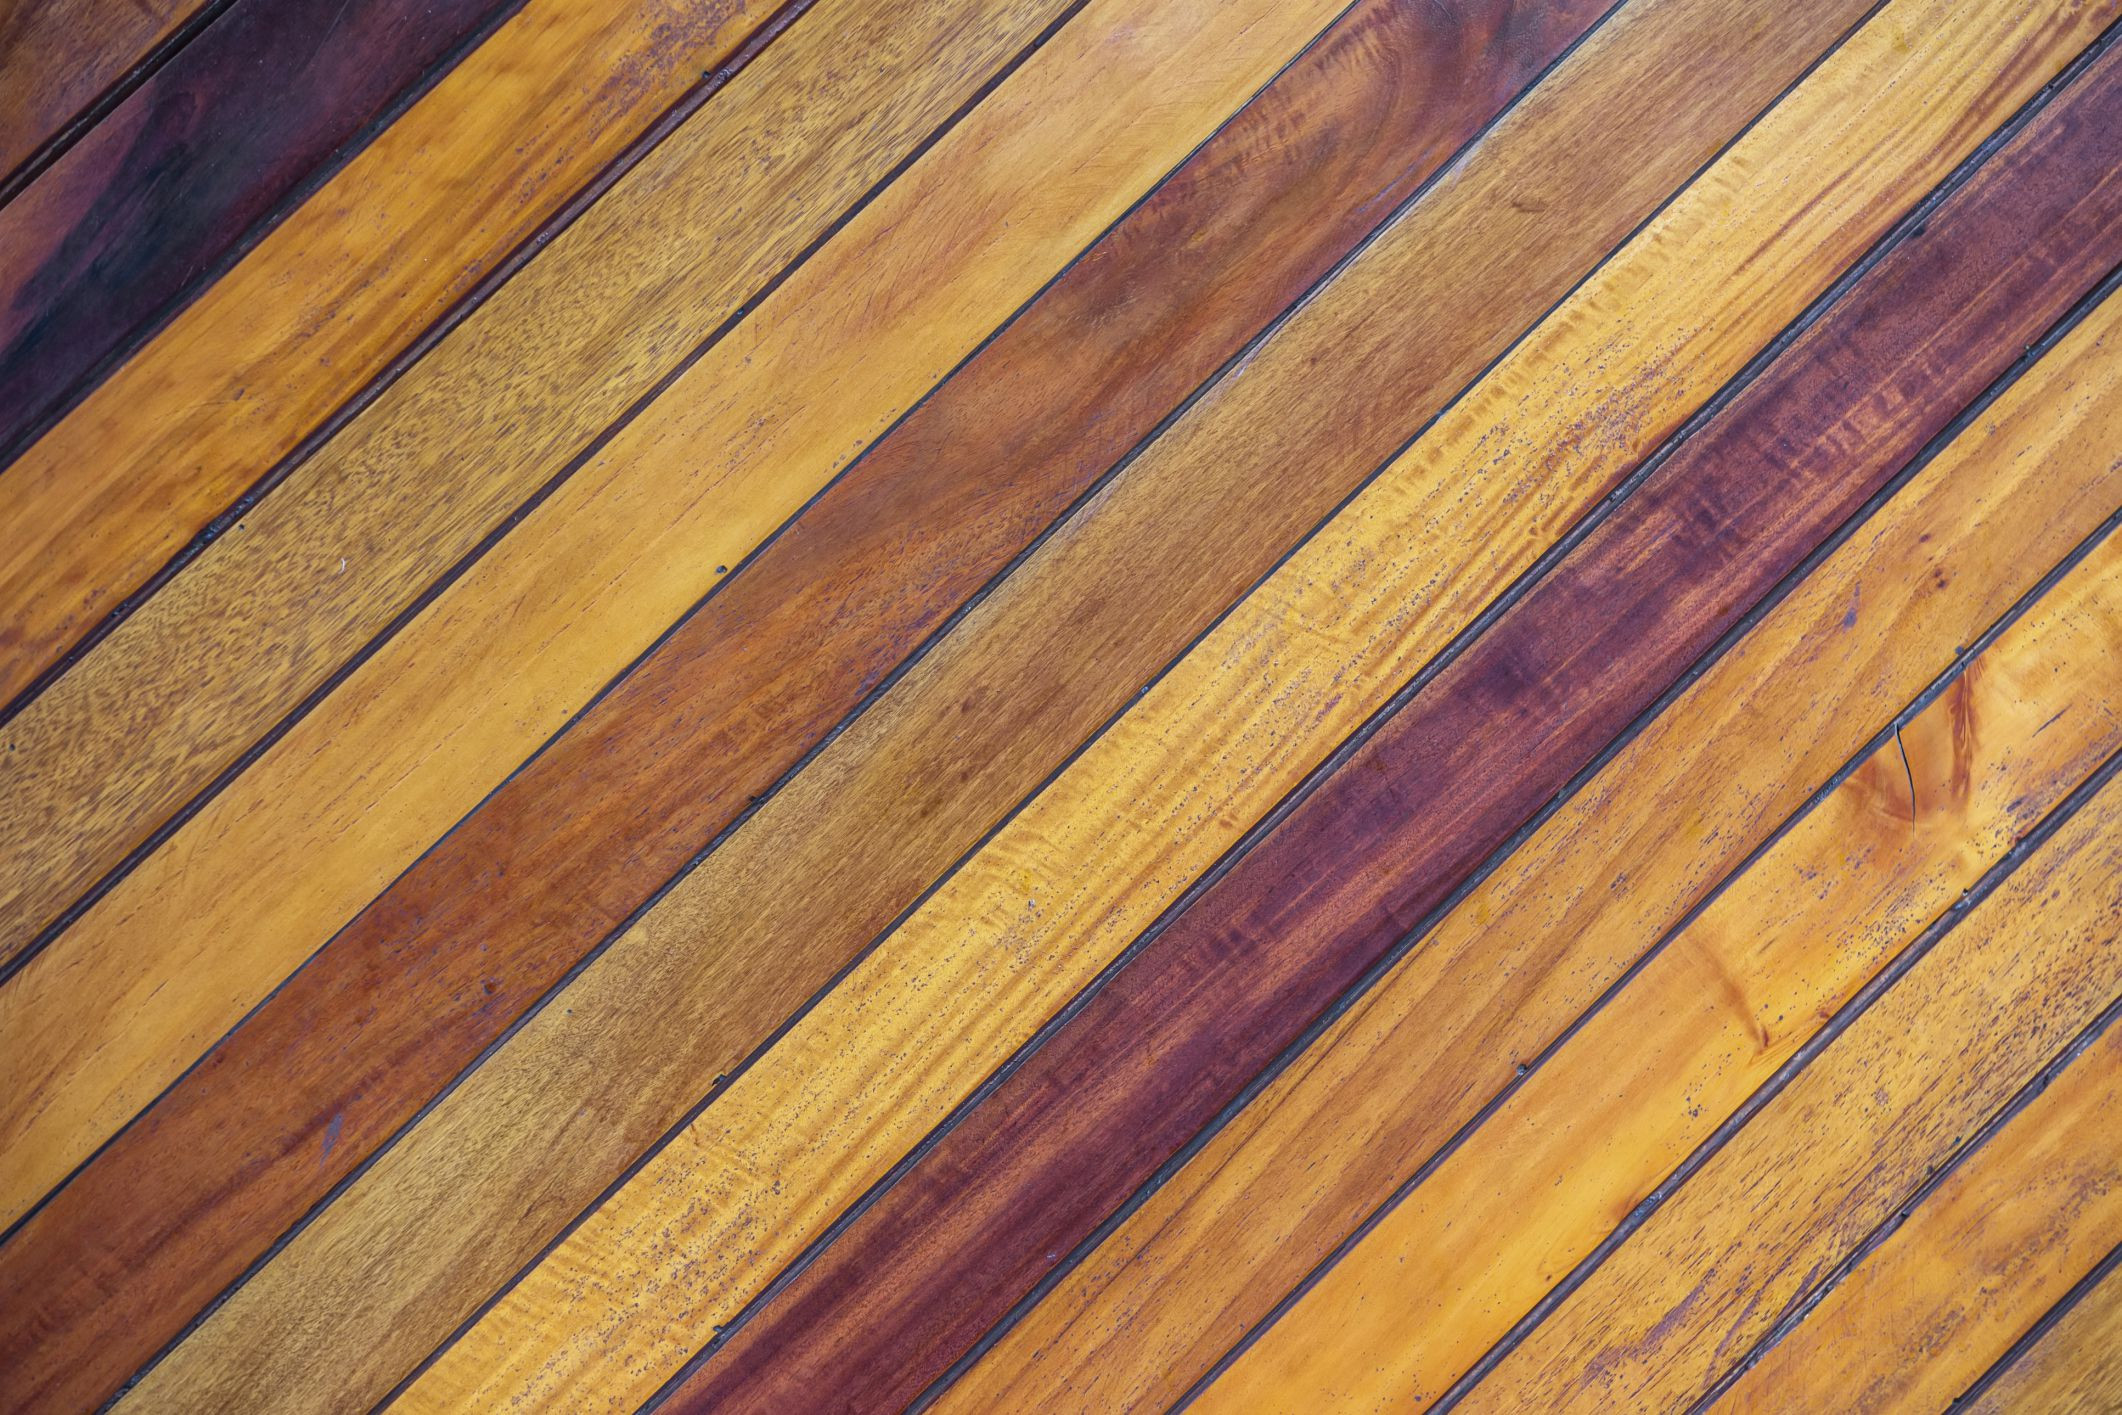 repairing gaps in old hardwood floors of subfloor repair and floor leveling techniques regarding uneven wooden flooring 170024909 56a4a1853df78cf7728353ab